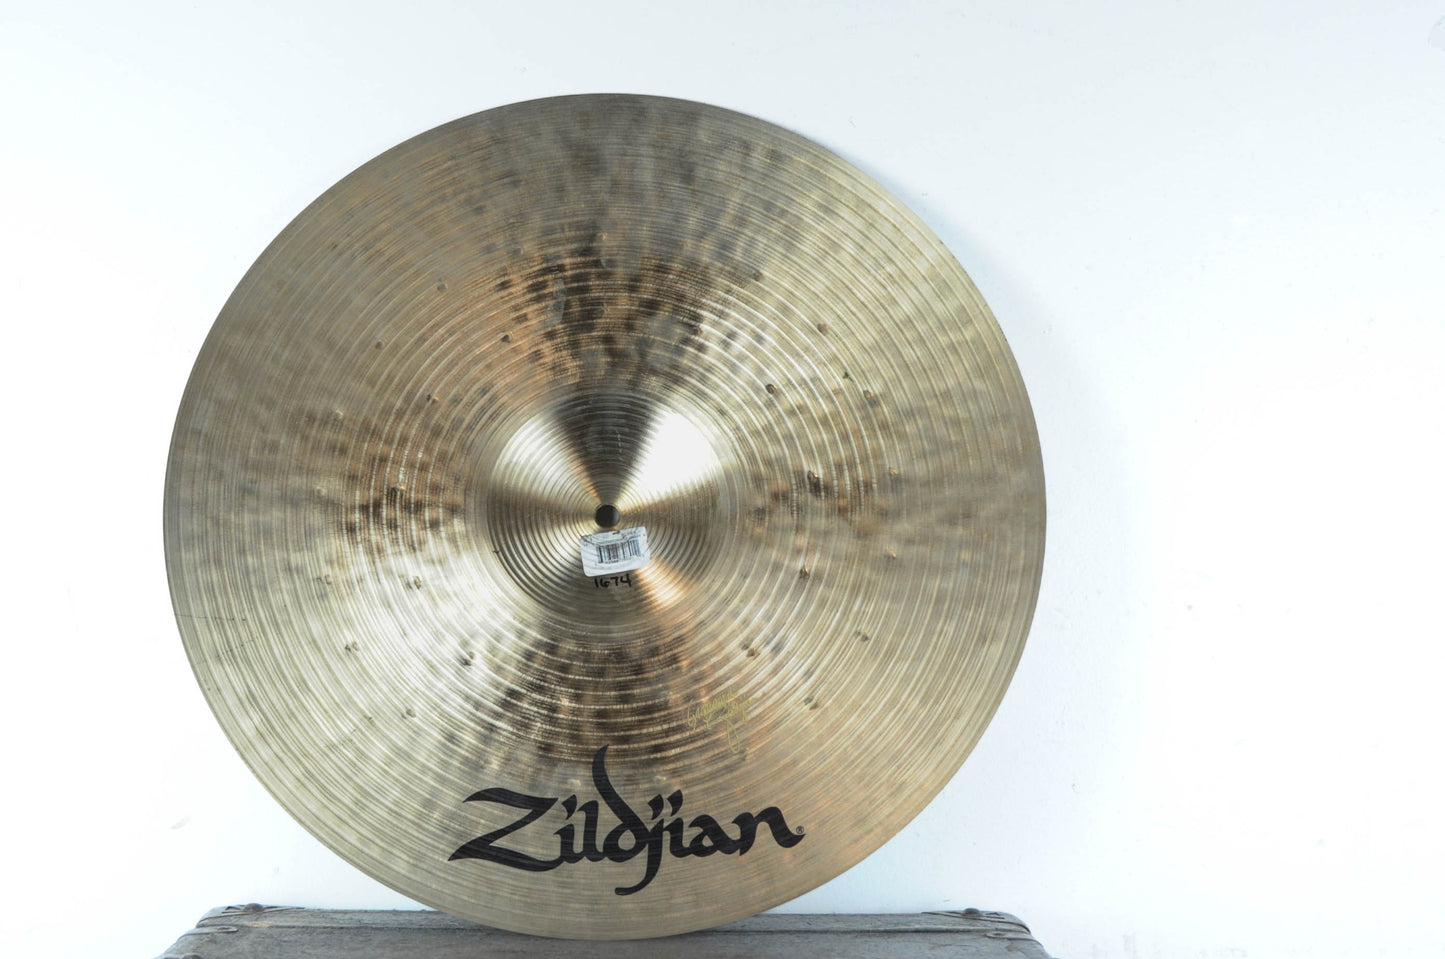 Zildjian 19" K Constantinople Crash Ride Cymbal 1674g